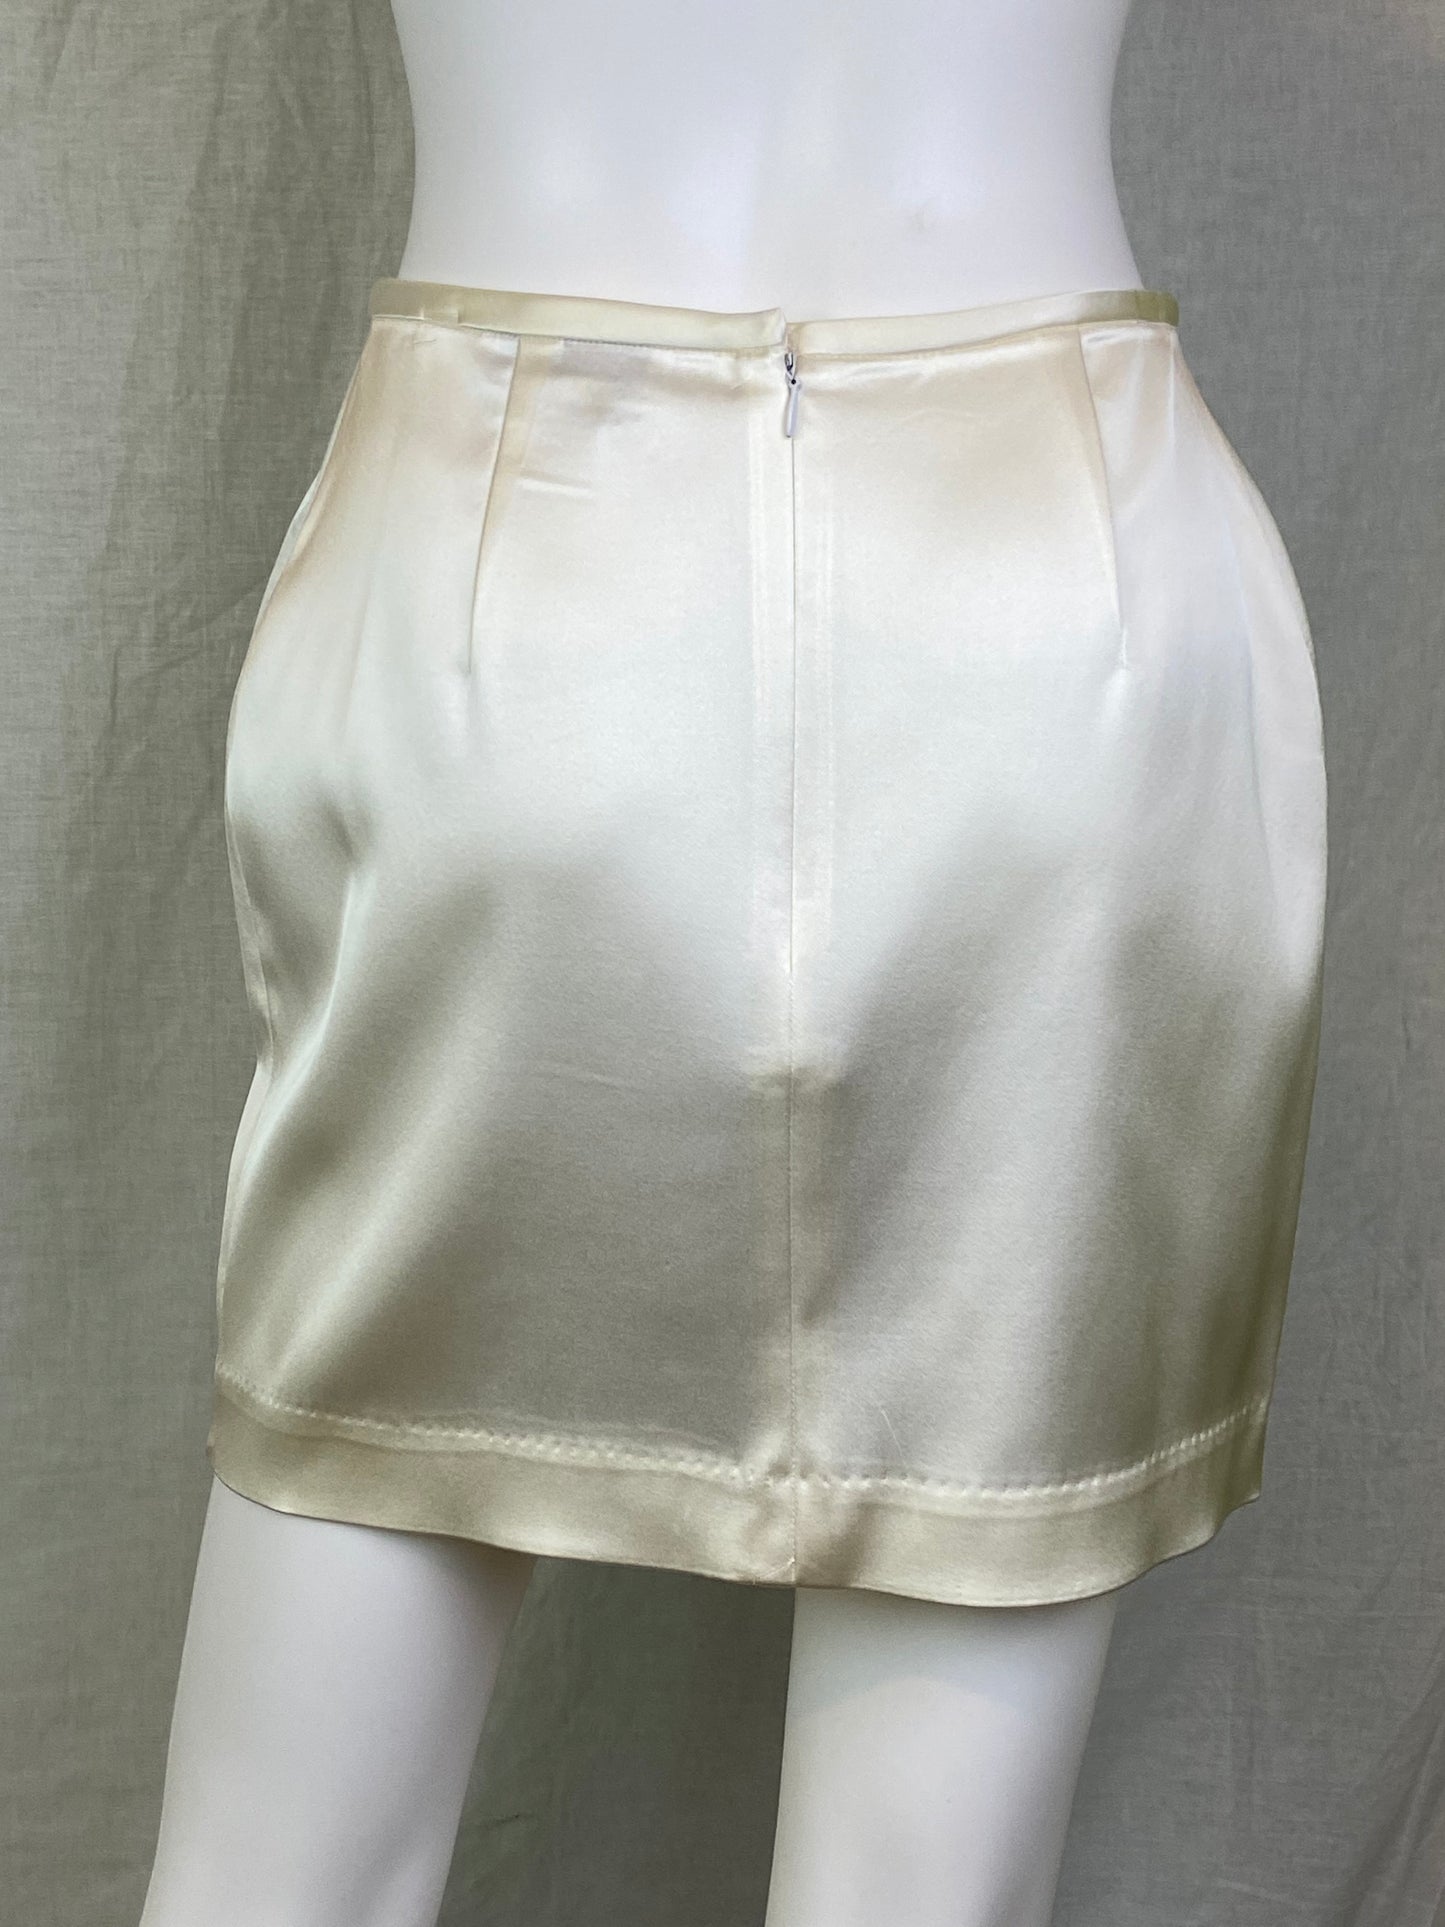 Adrianna Papell White Ivory Satin Cocktail Mini Skirt